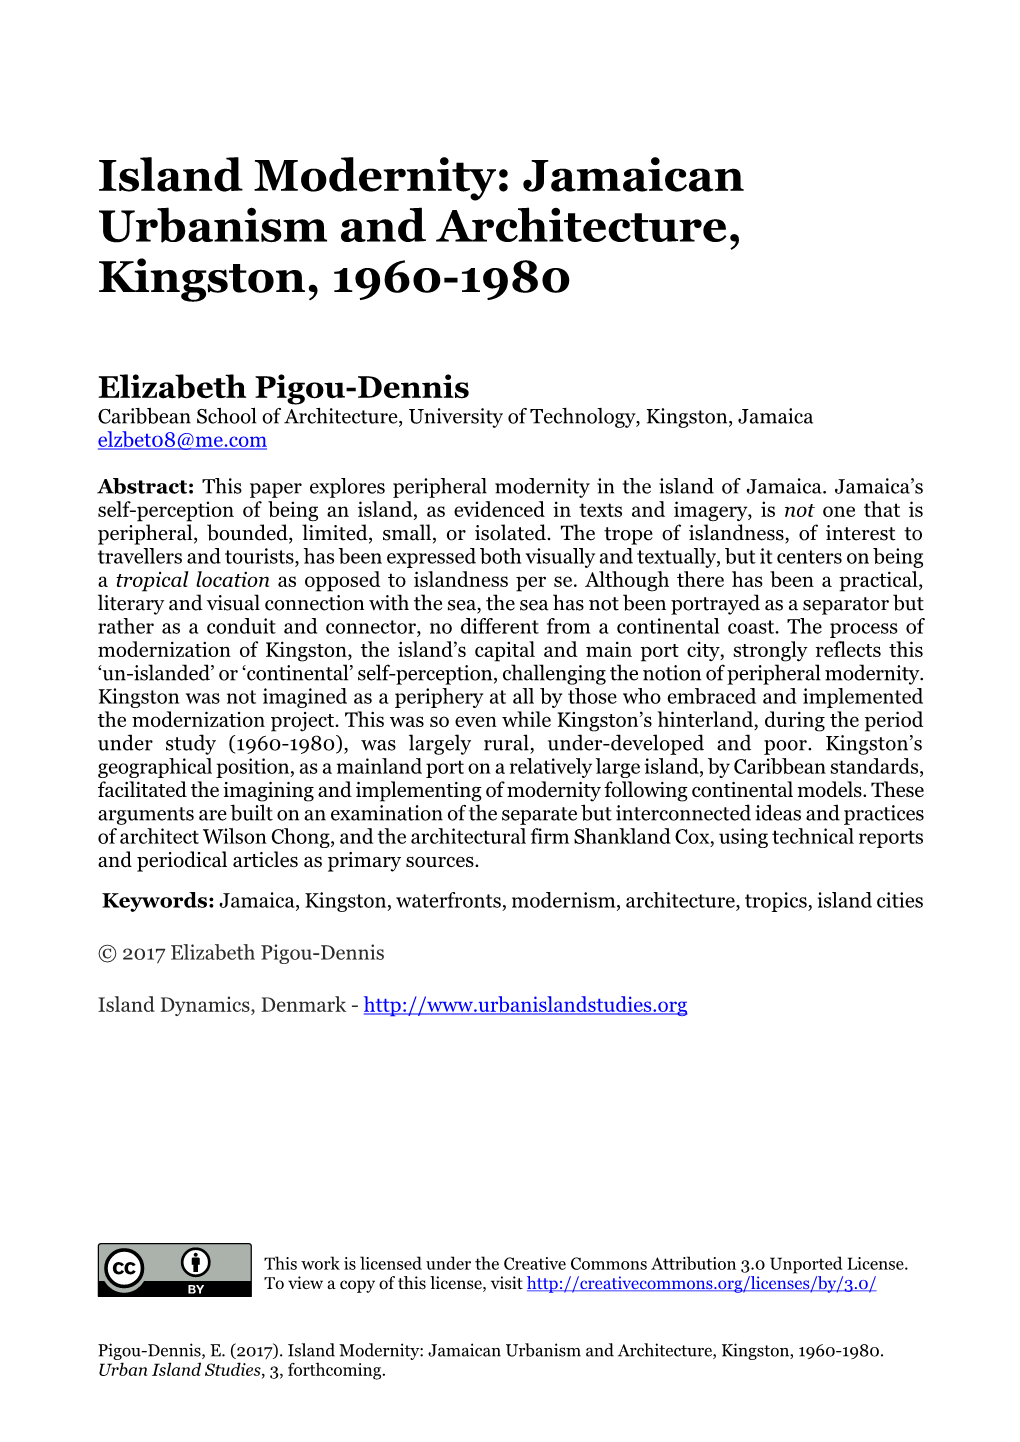 Island Modernity: Jamaican Urbanism and Architecture, Kingston, 1960-1980